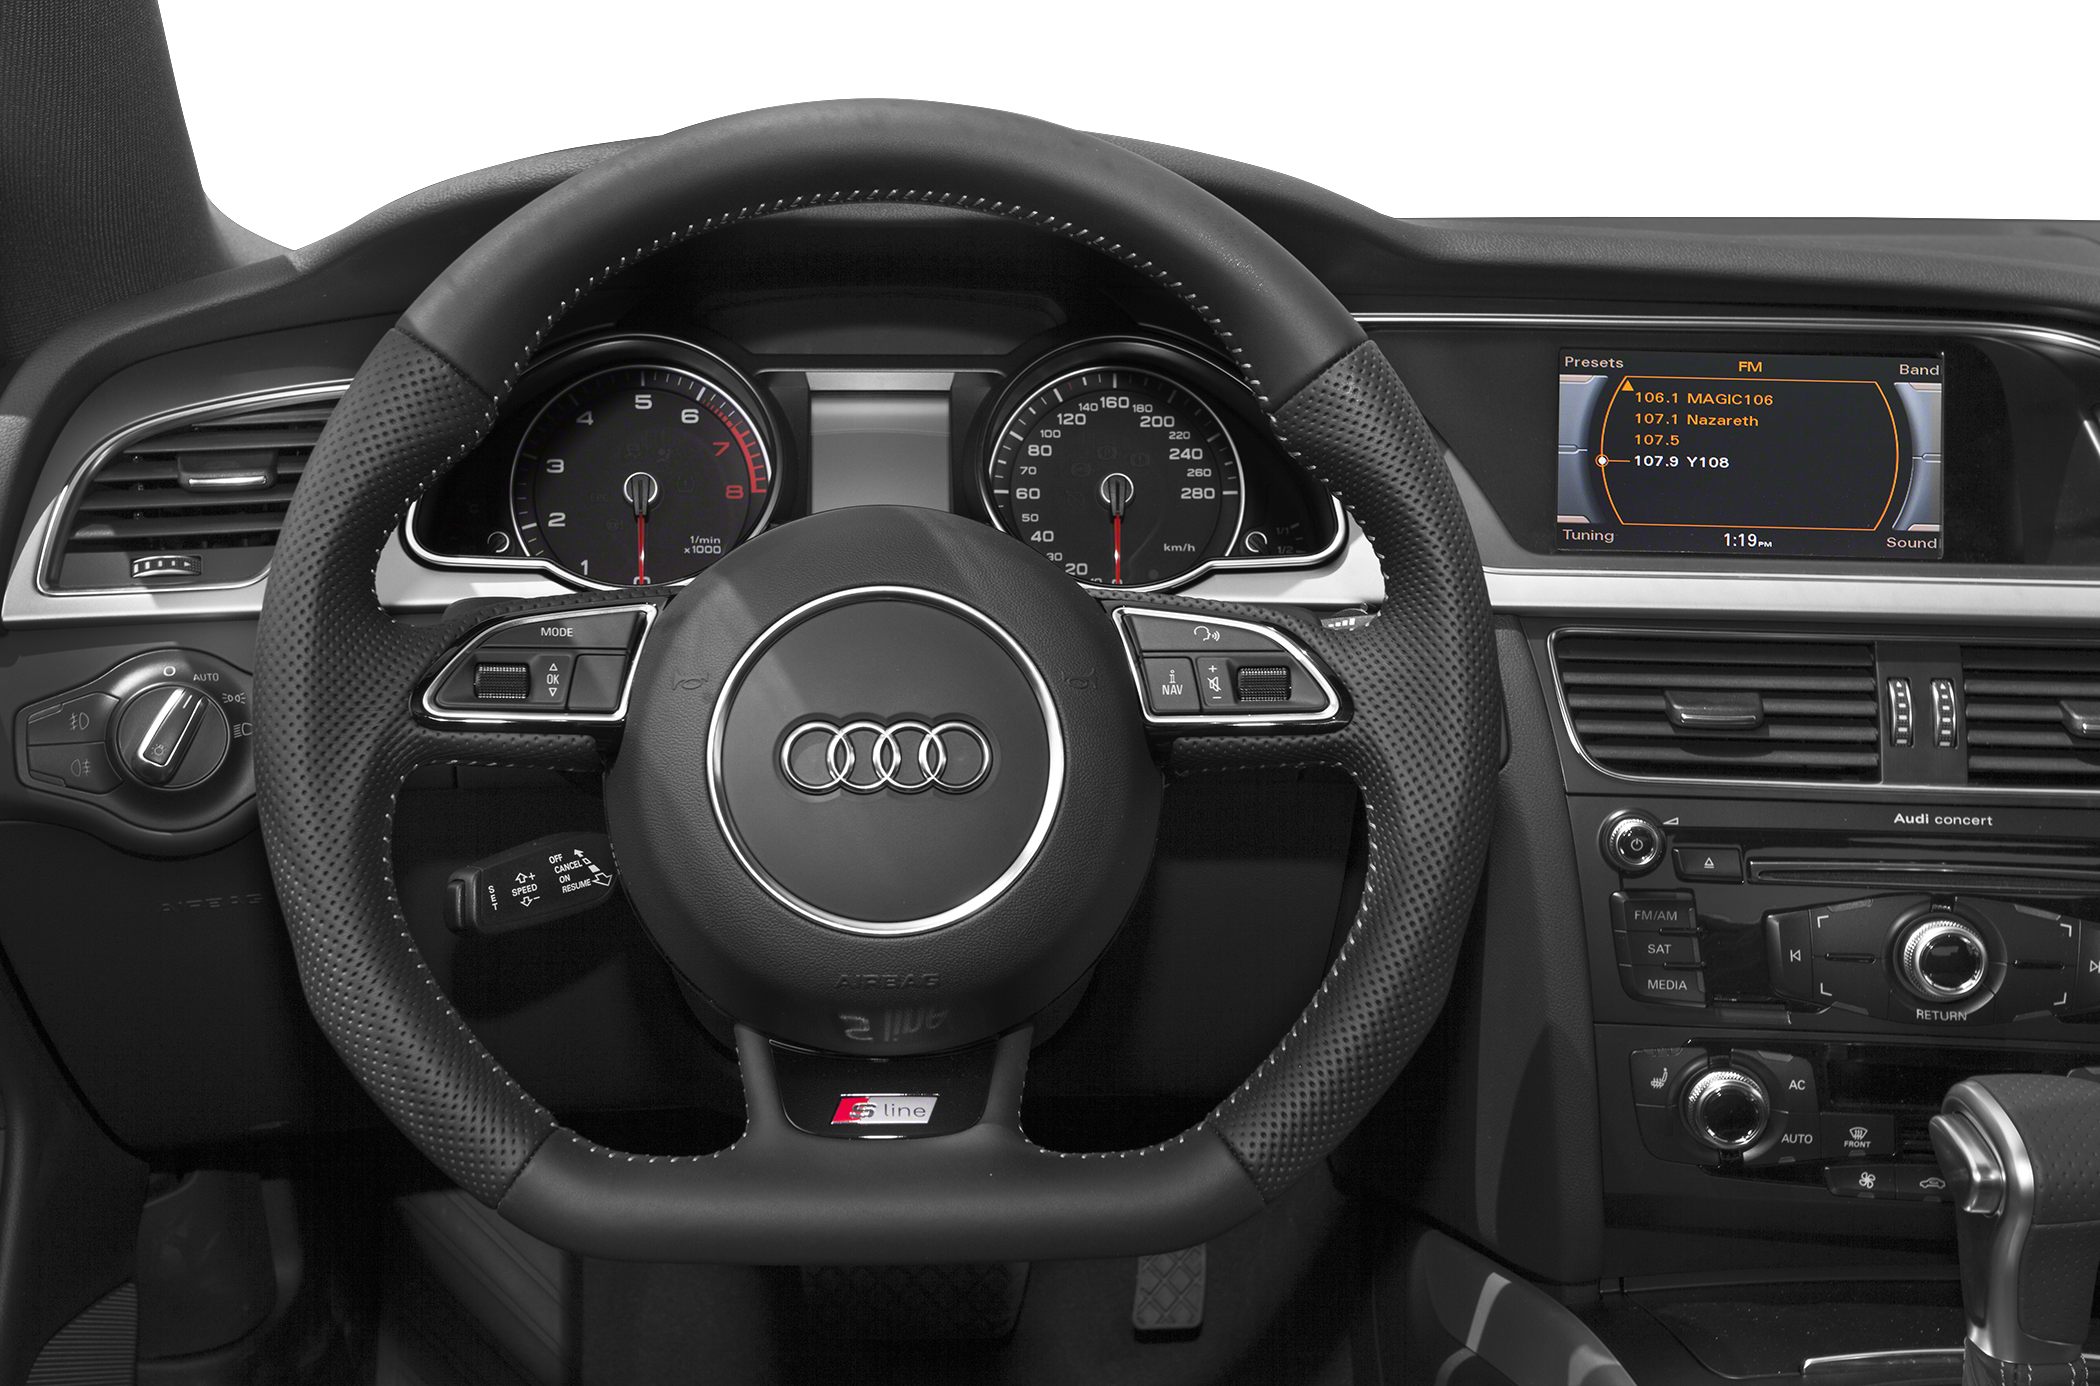 Купить ауди на механике. Ауди а5 2014 салон. Audi a5 Coupe 2014 салон. Audi a5 2016 купе салон. Мультируль Ауди а 5 купе.